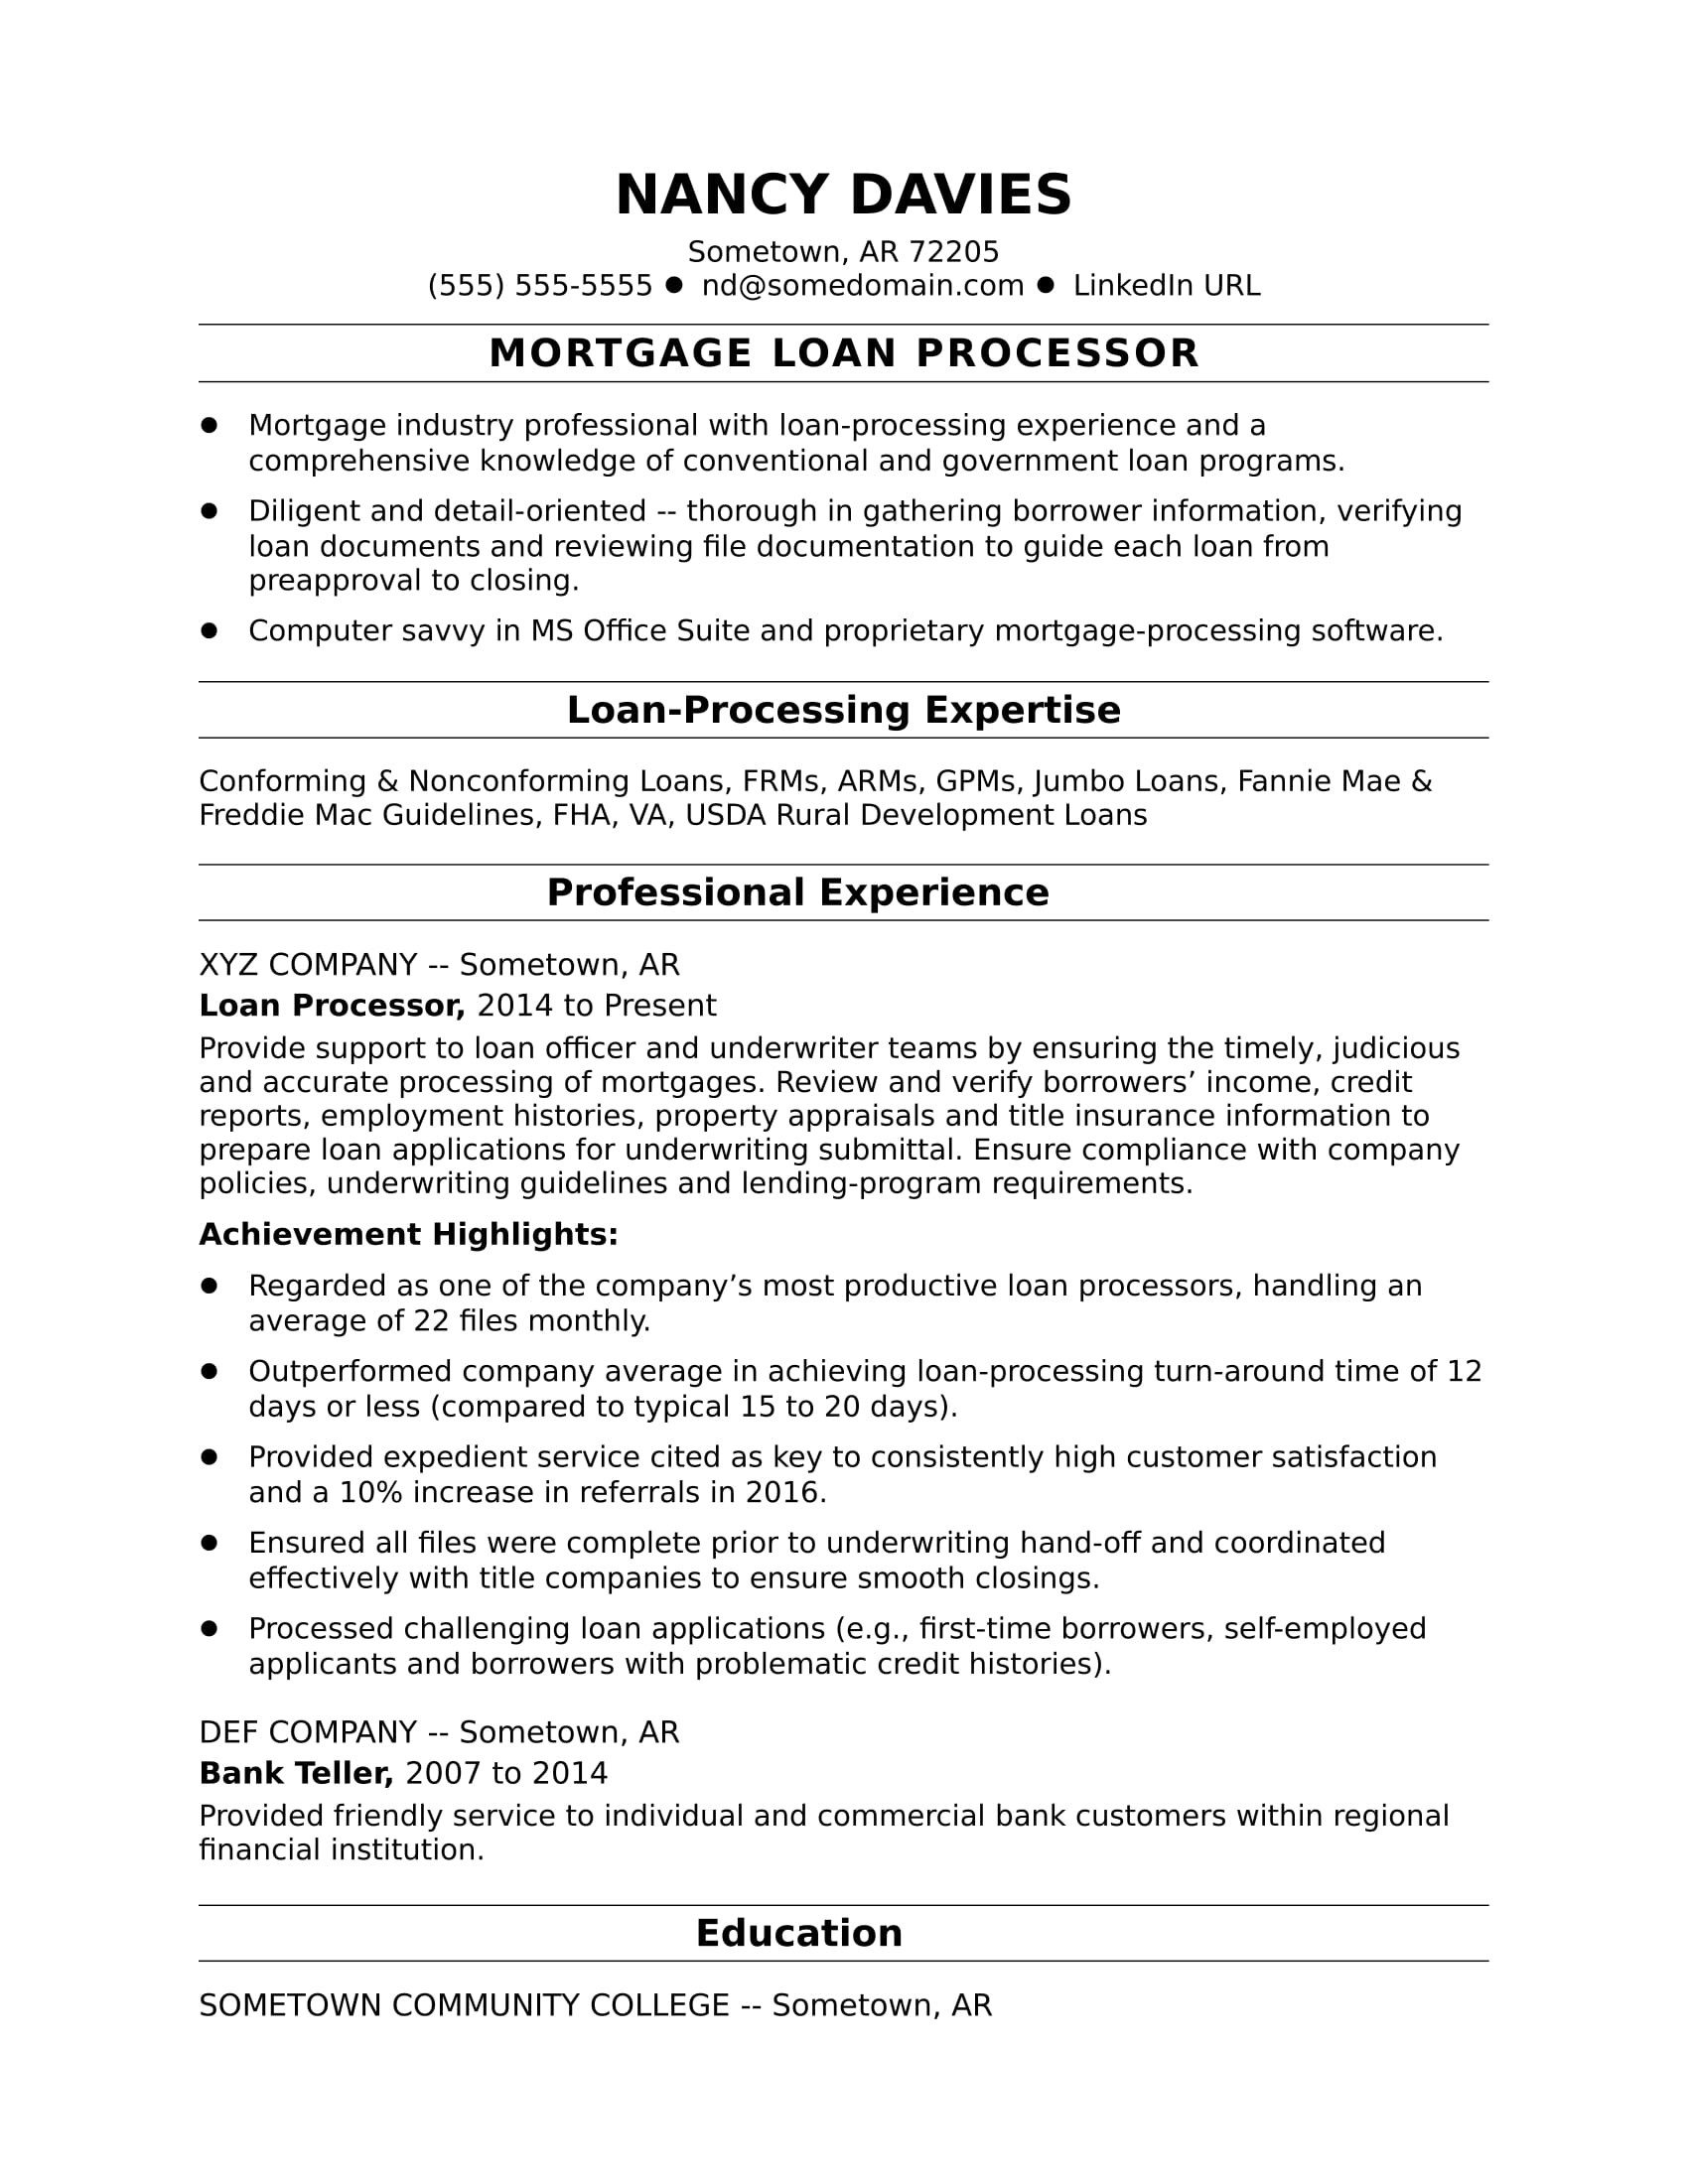 Sample Resume for Mortgage Loan originator Mortgage Loan Processor Resume Sample Monster.com